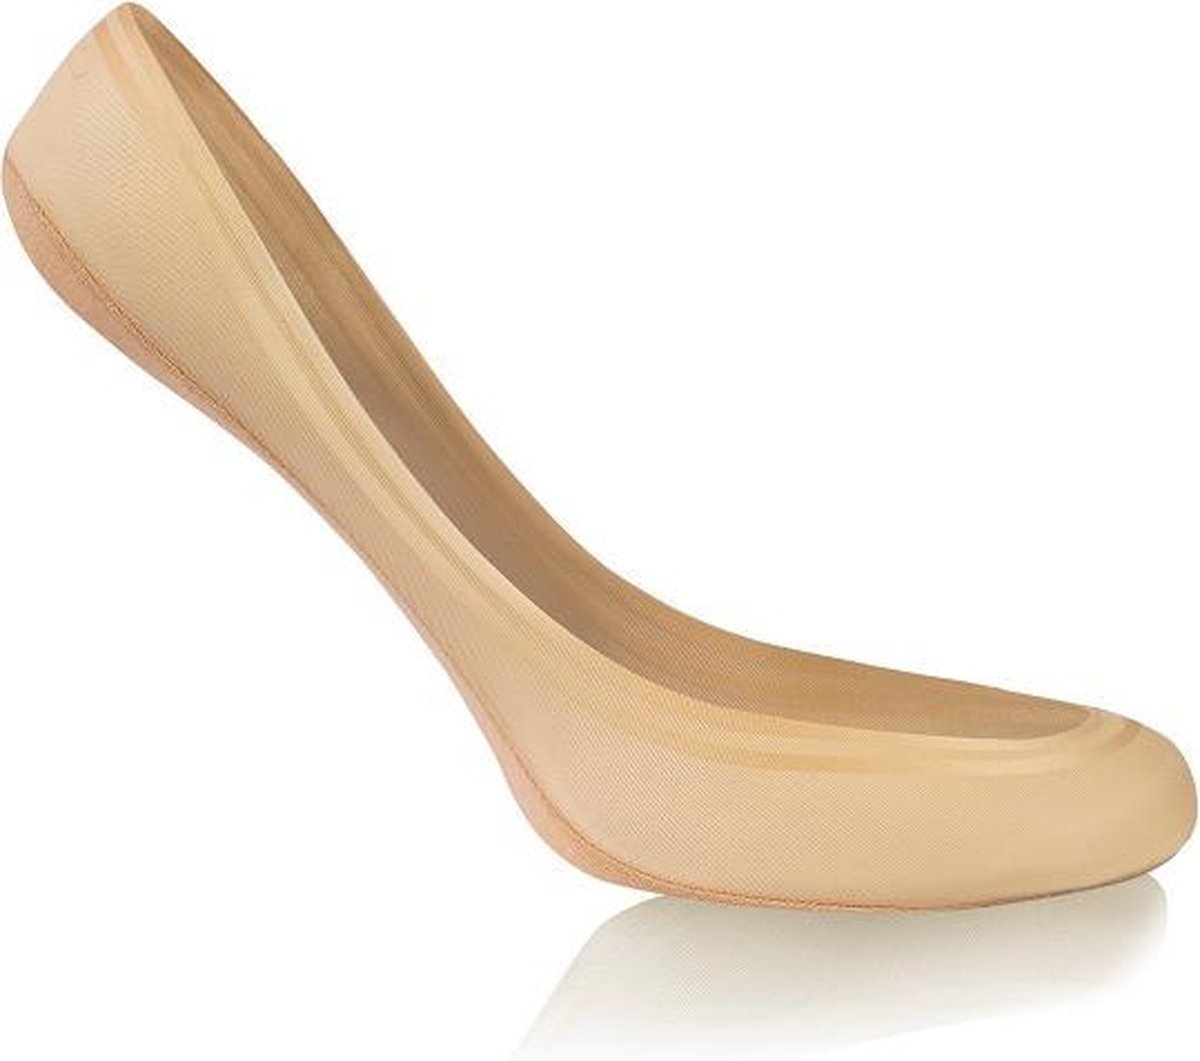 2 pack Sesto-Senso dames ballerina sokjes beige met siliconen antislip, maat 39-42 - Sesto senso